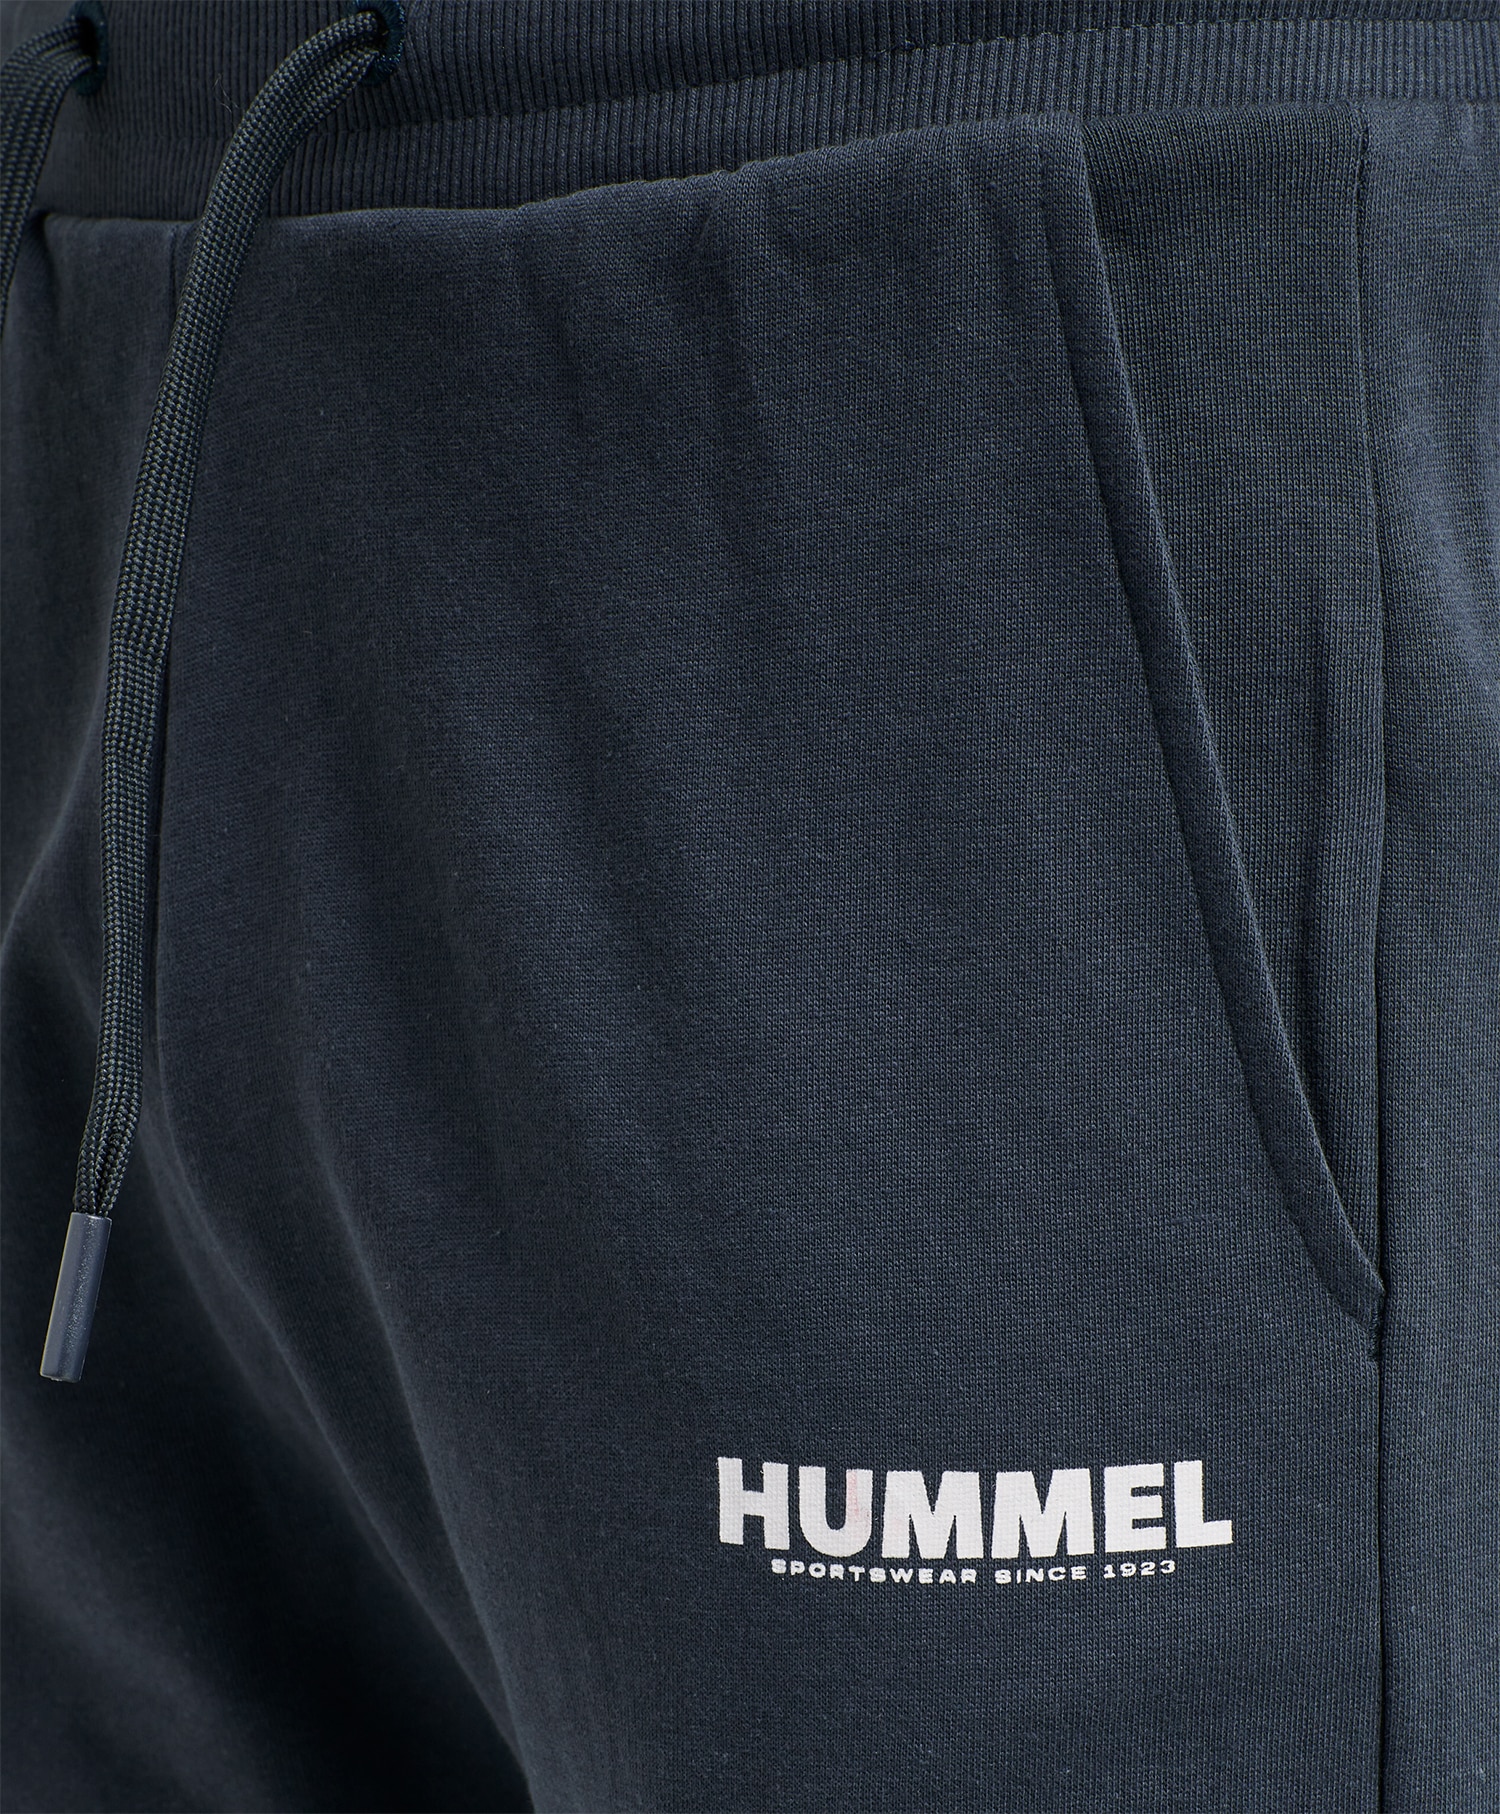 Hummel Legacy Shorts